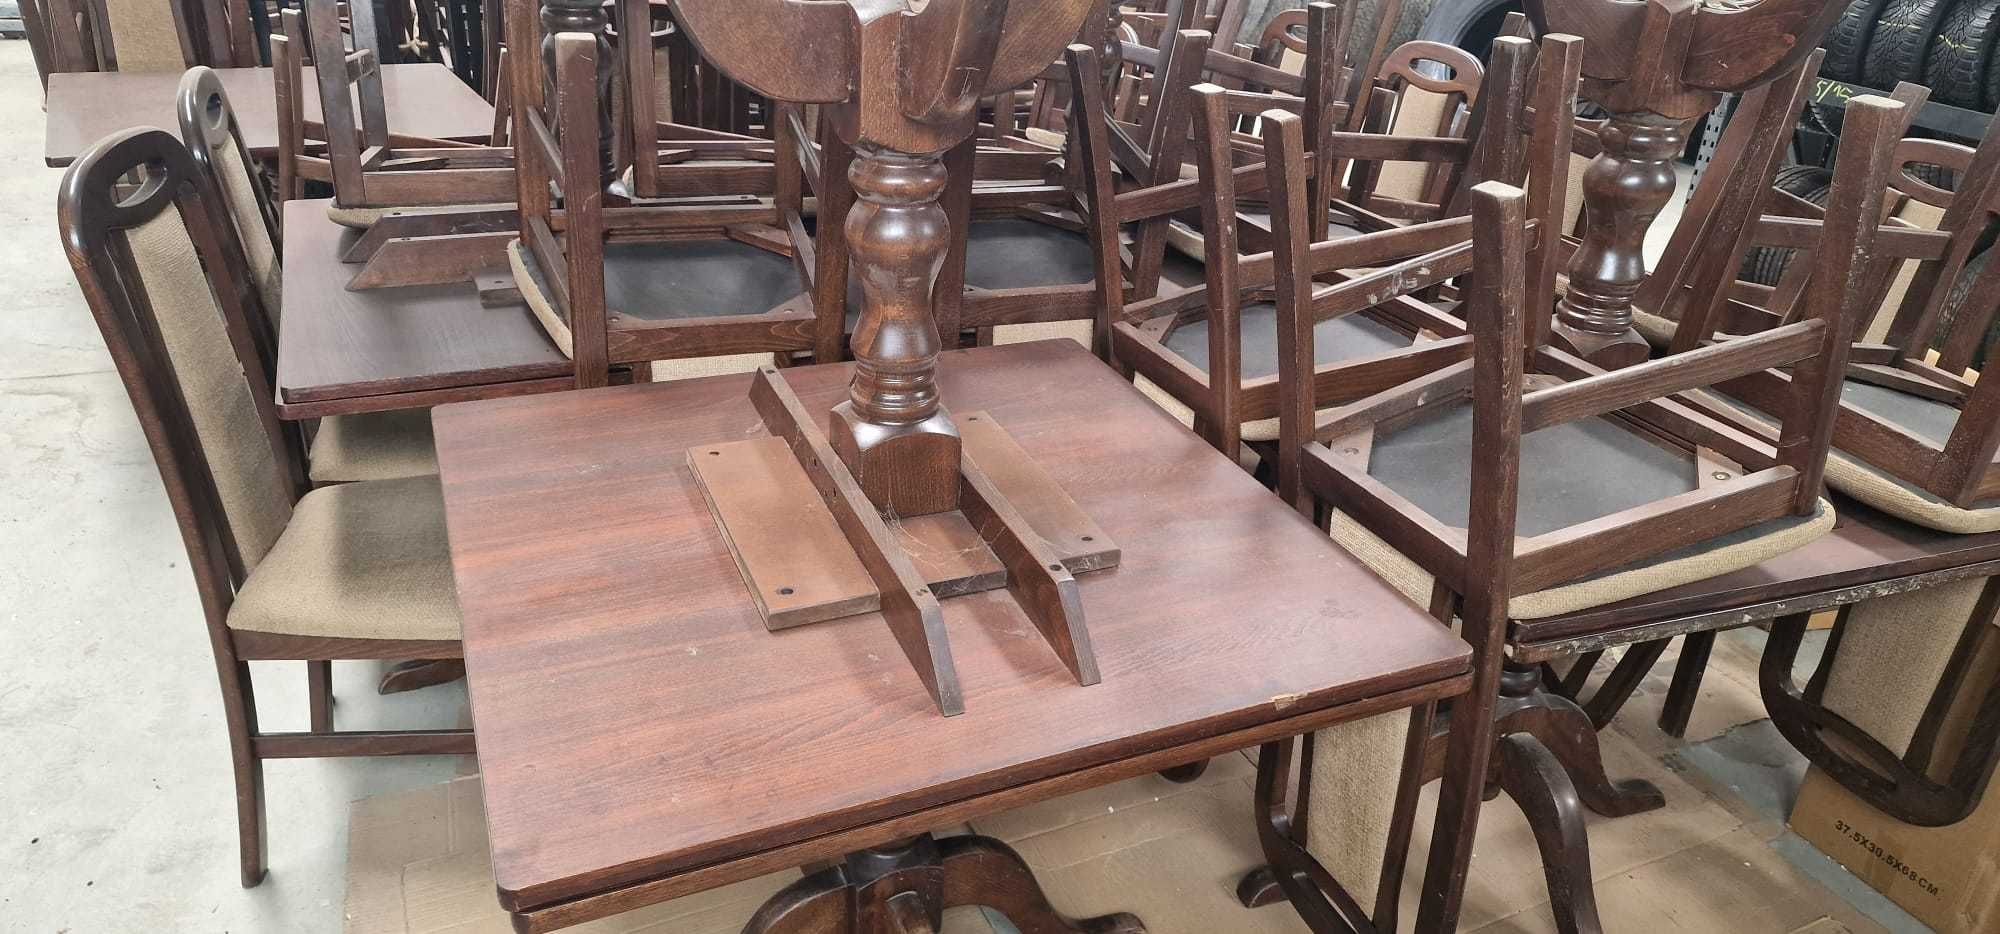 Mese si scaune pentru restaurant sau terasa realizate din lemn masiv